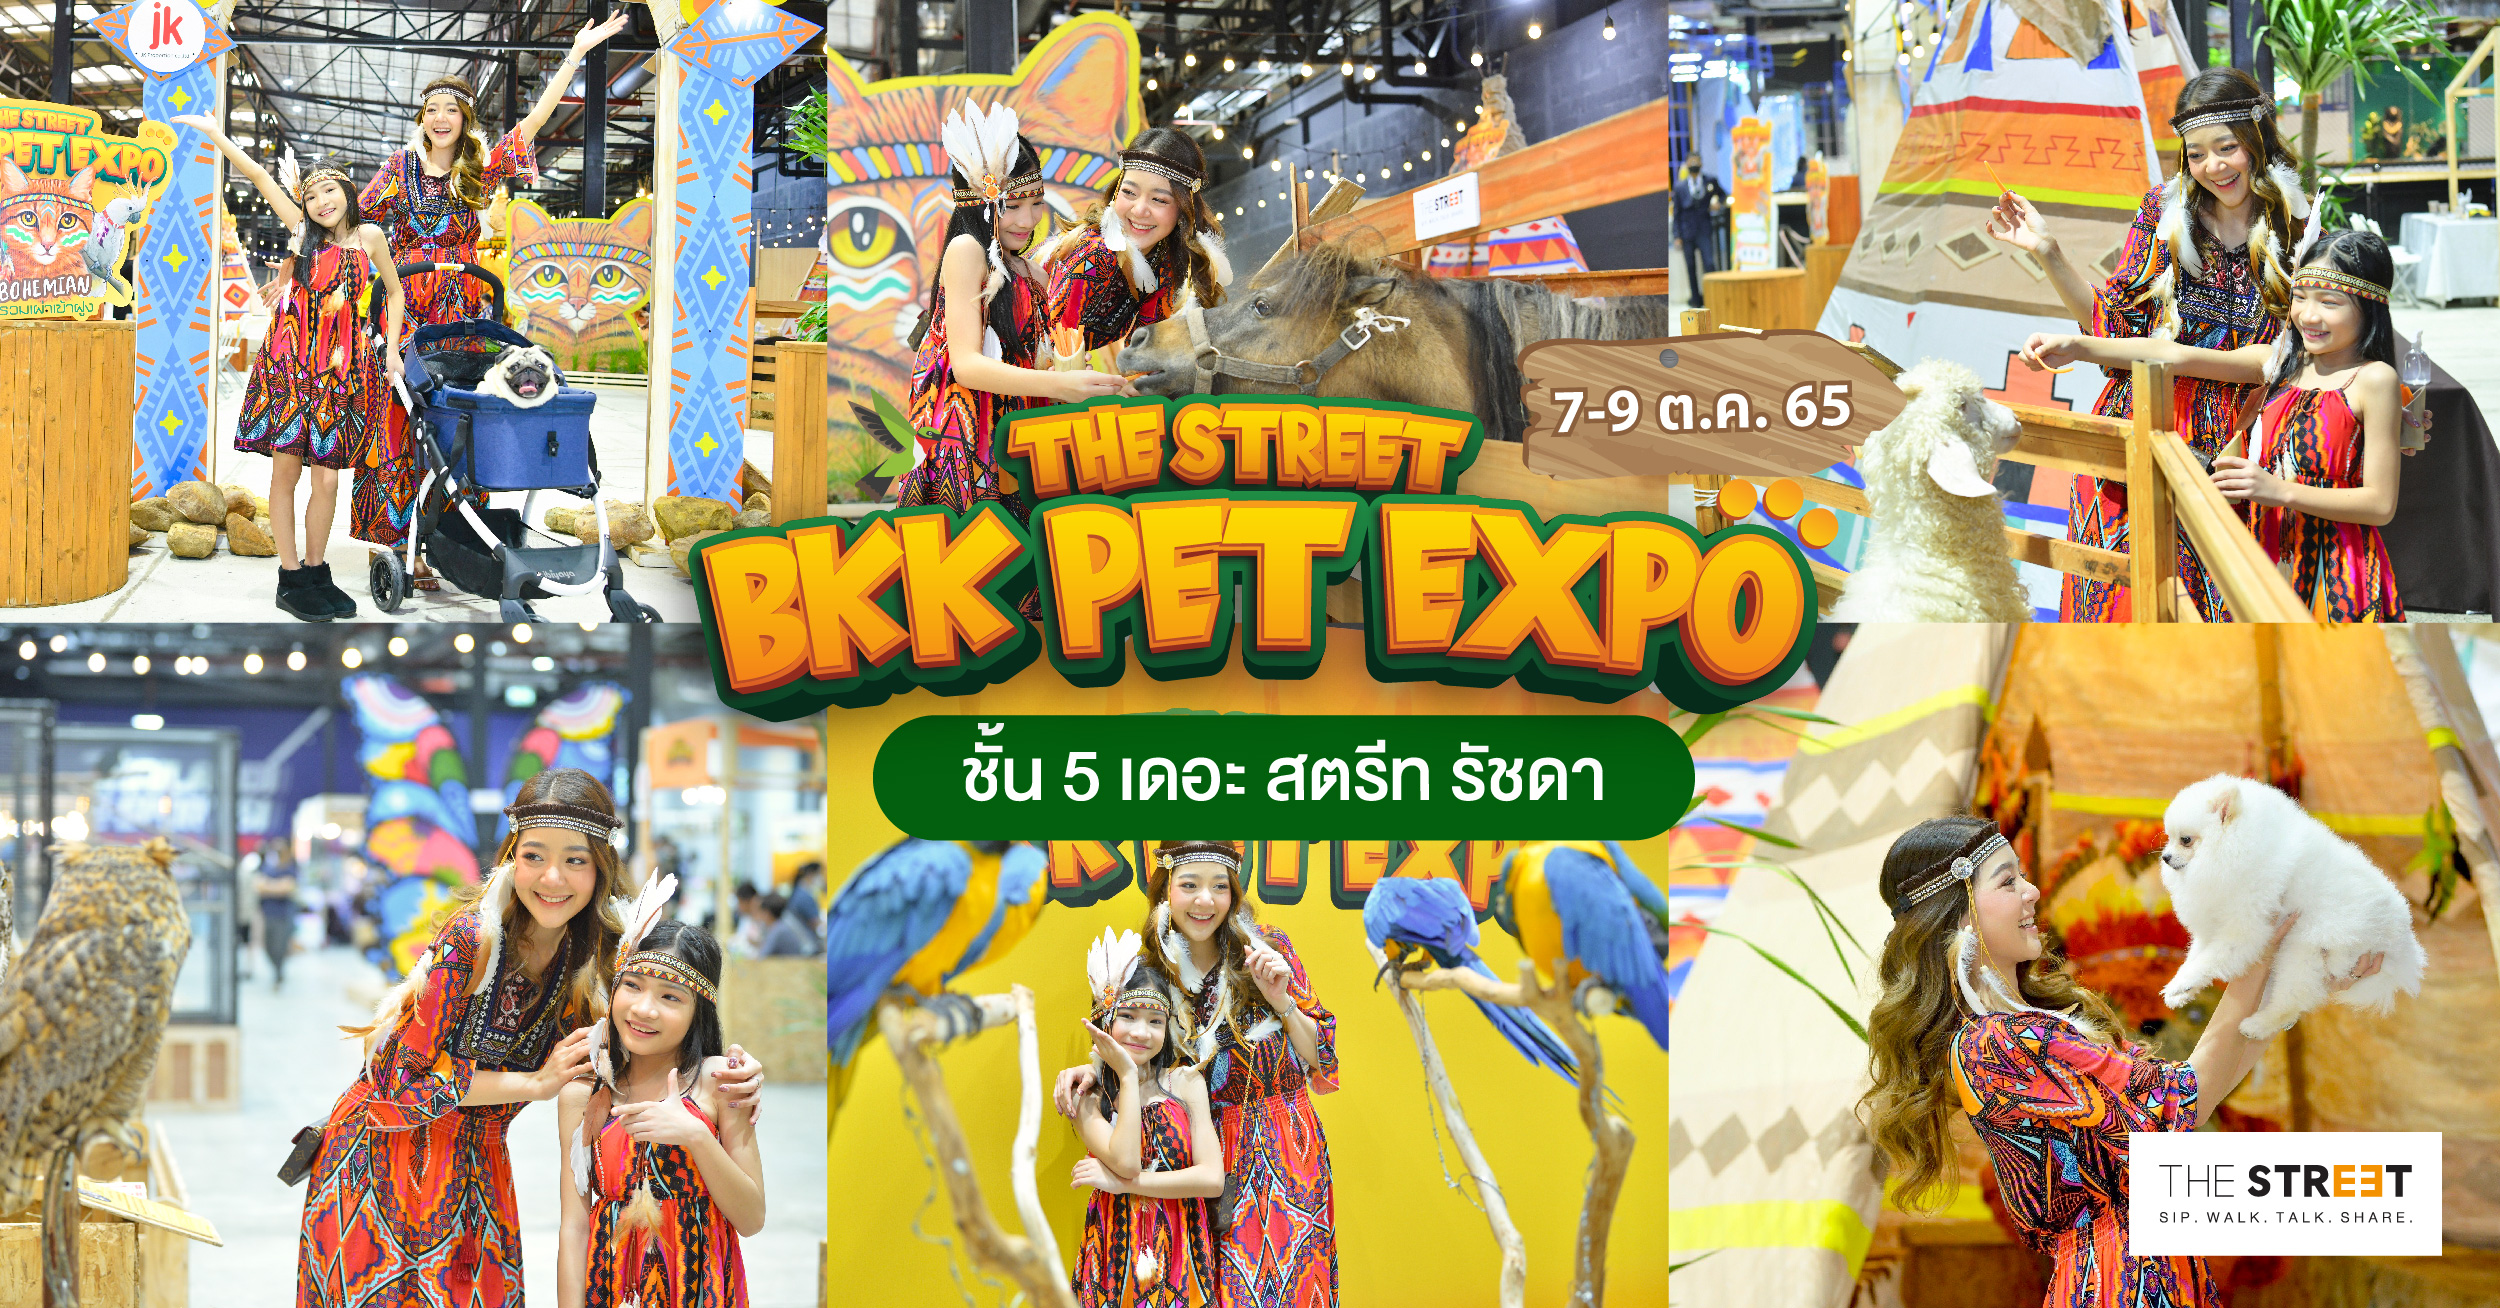 the-street-bkk-pet-expo-รวมเผ่าเข้าฝูง